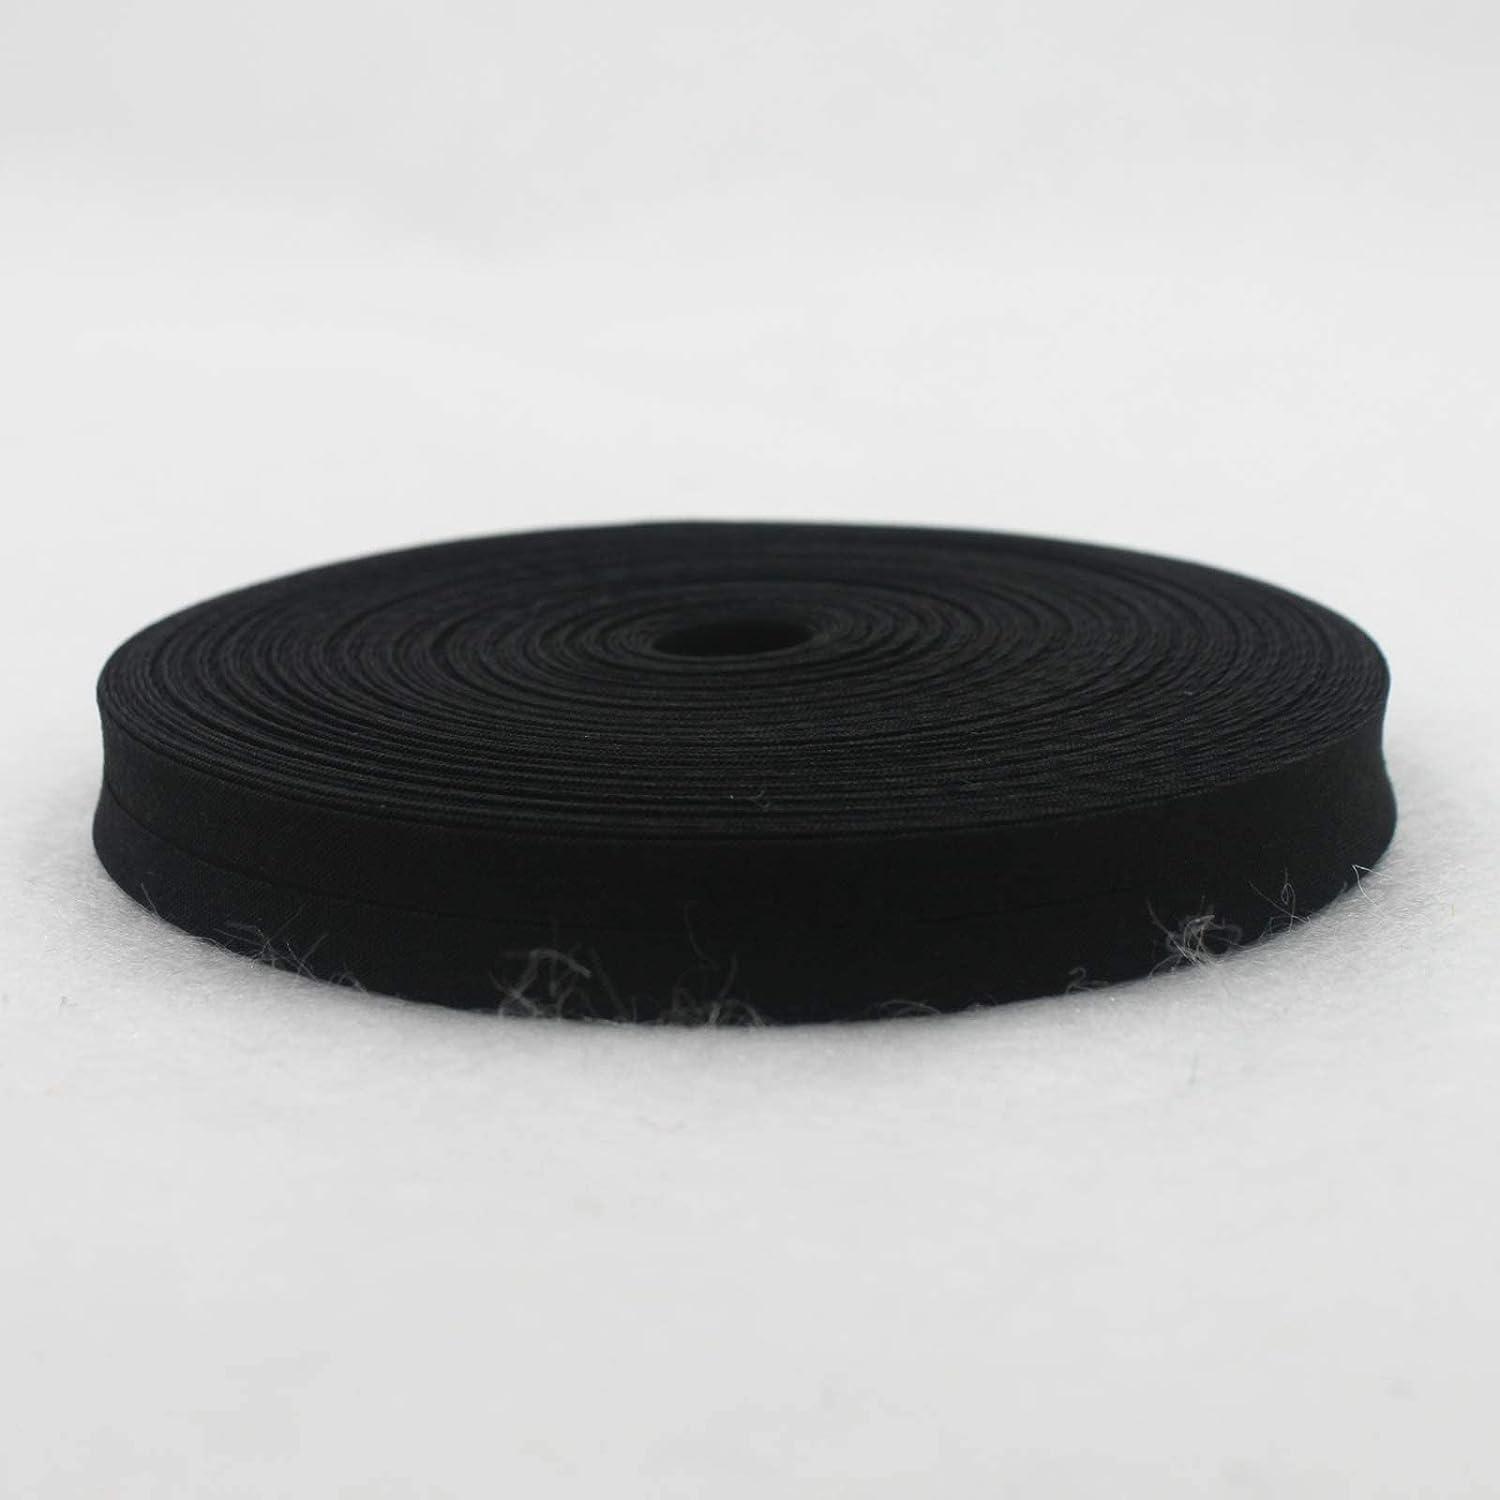 Polyester Bias Binding Tape,bias tape,size:12mm, width:1/2 inch